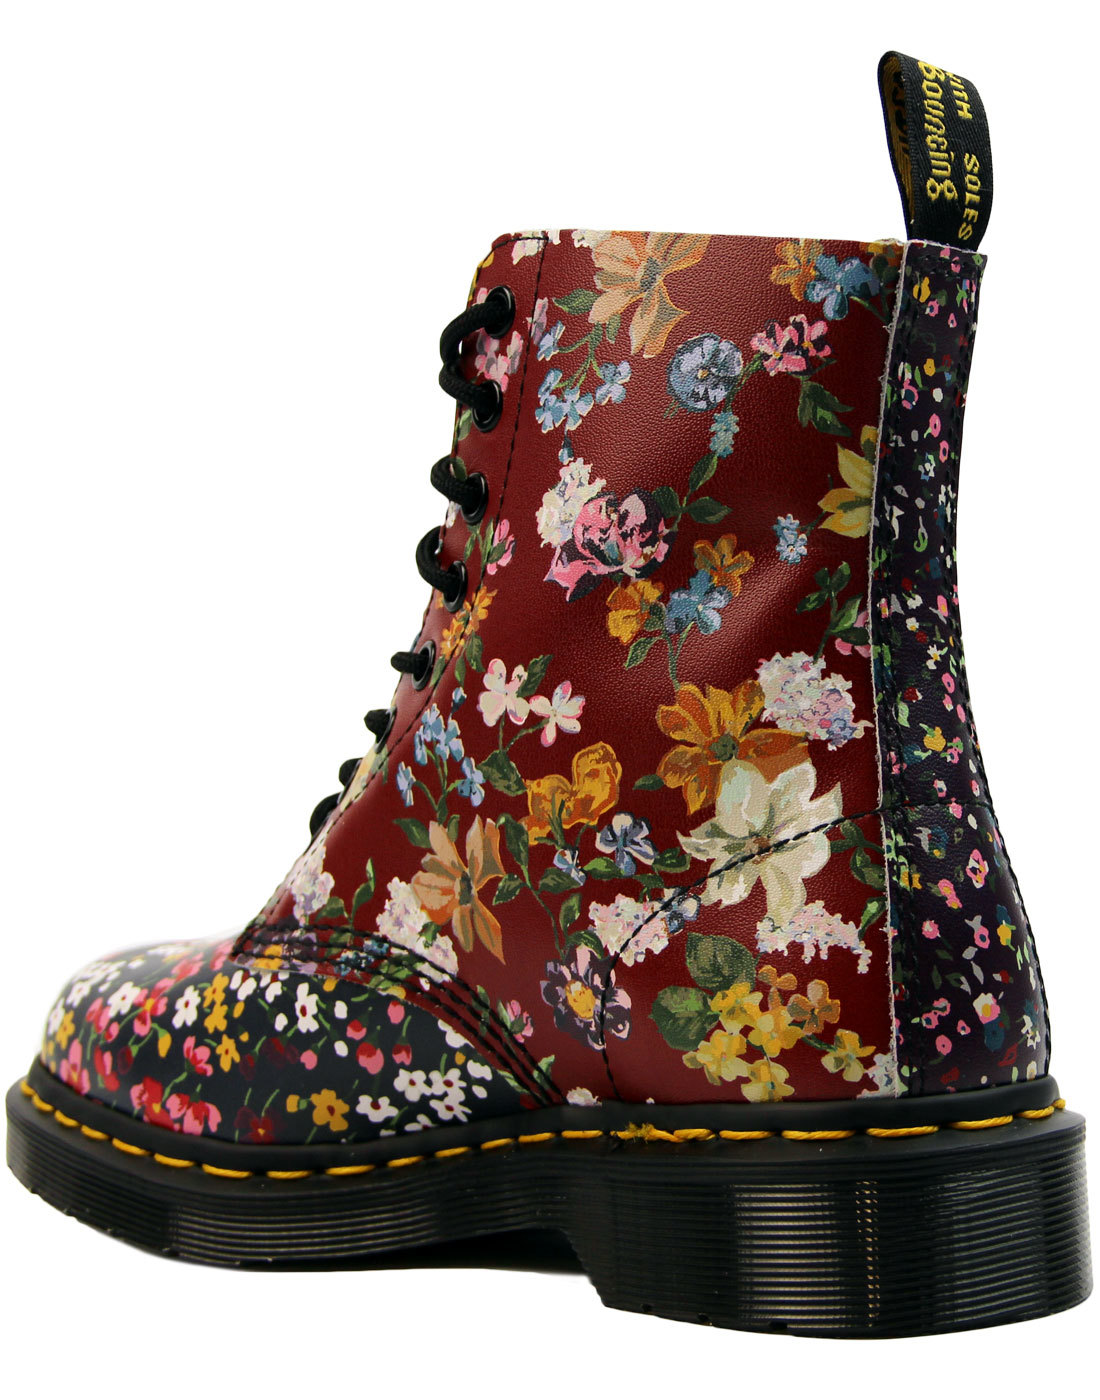 Boots/bottines Dr Martens 1460 PASCAL FLORAL multi vintage floral